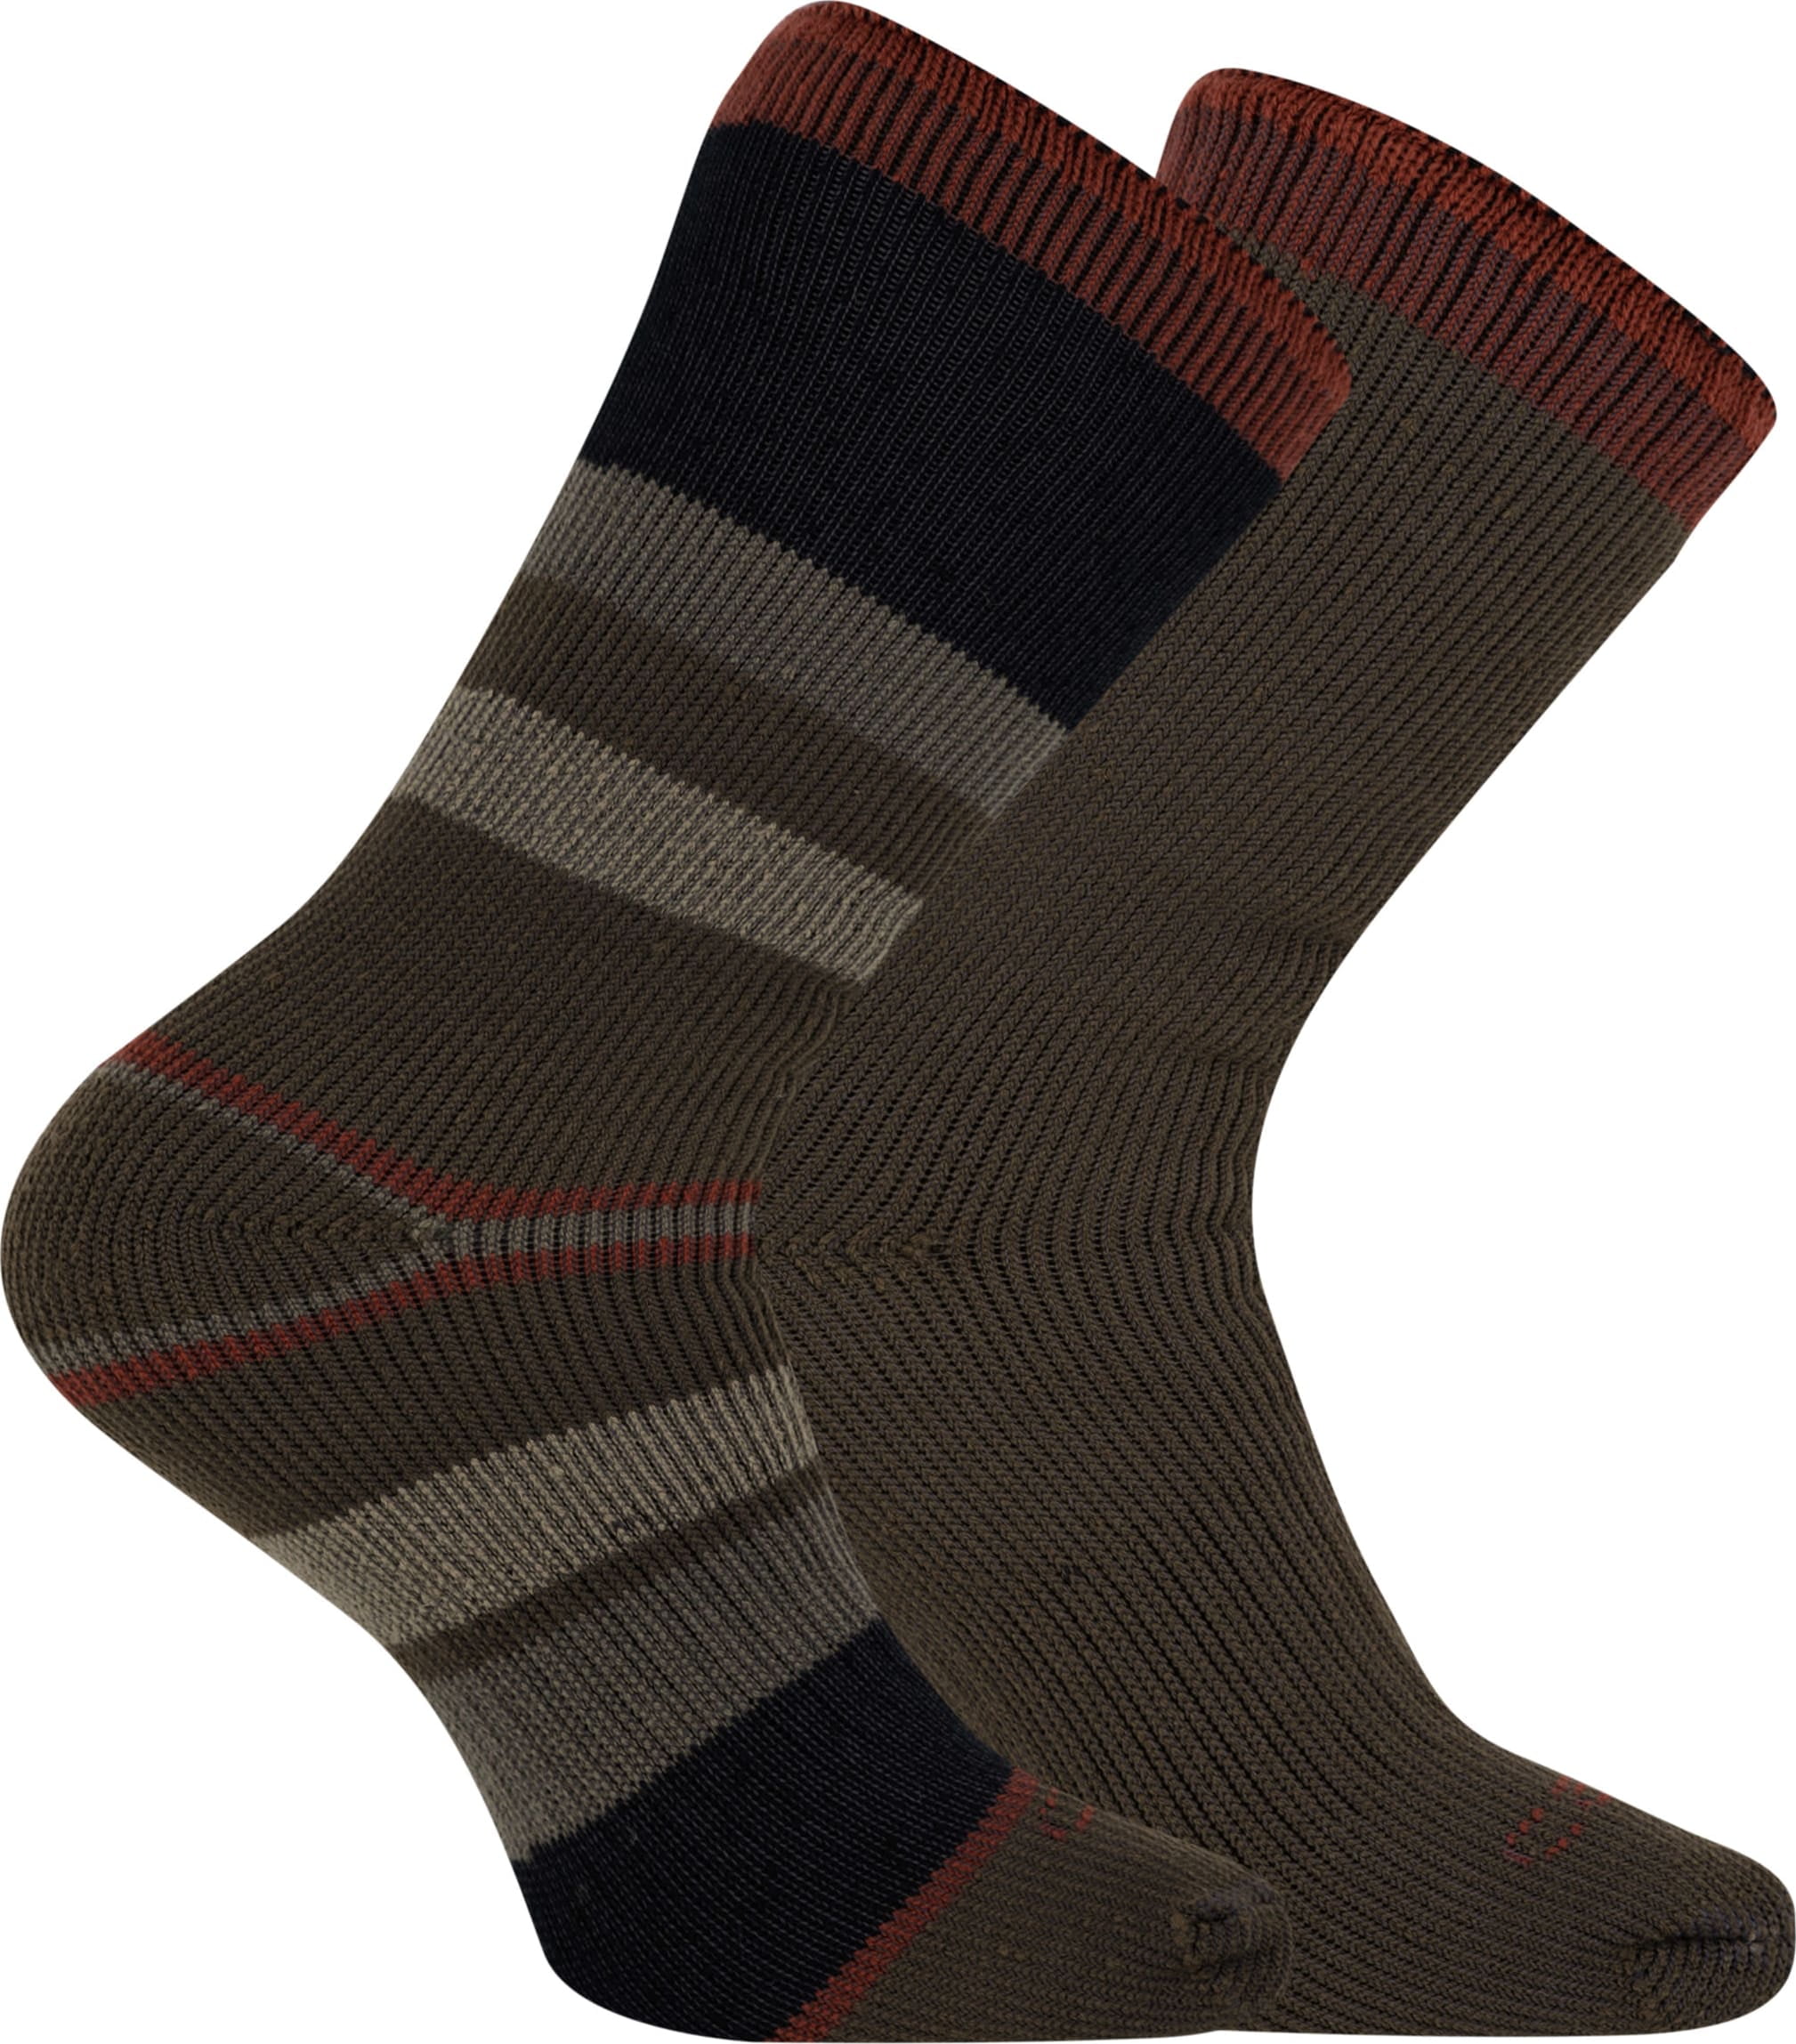 12 x Pairs Mens Extra Long Long Hose Warm Winter Thermal Socks Colour Choice 